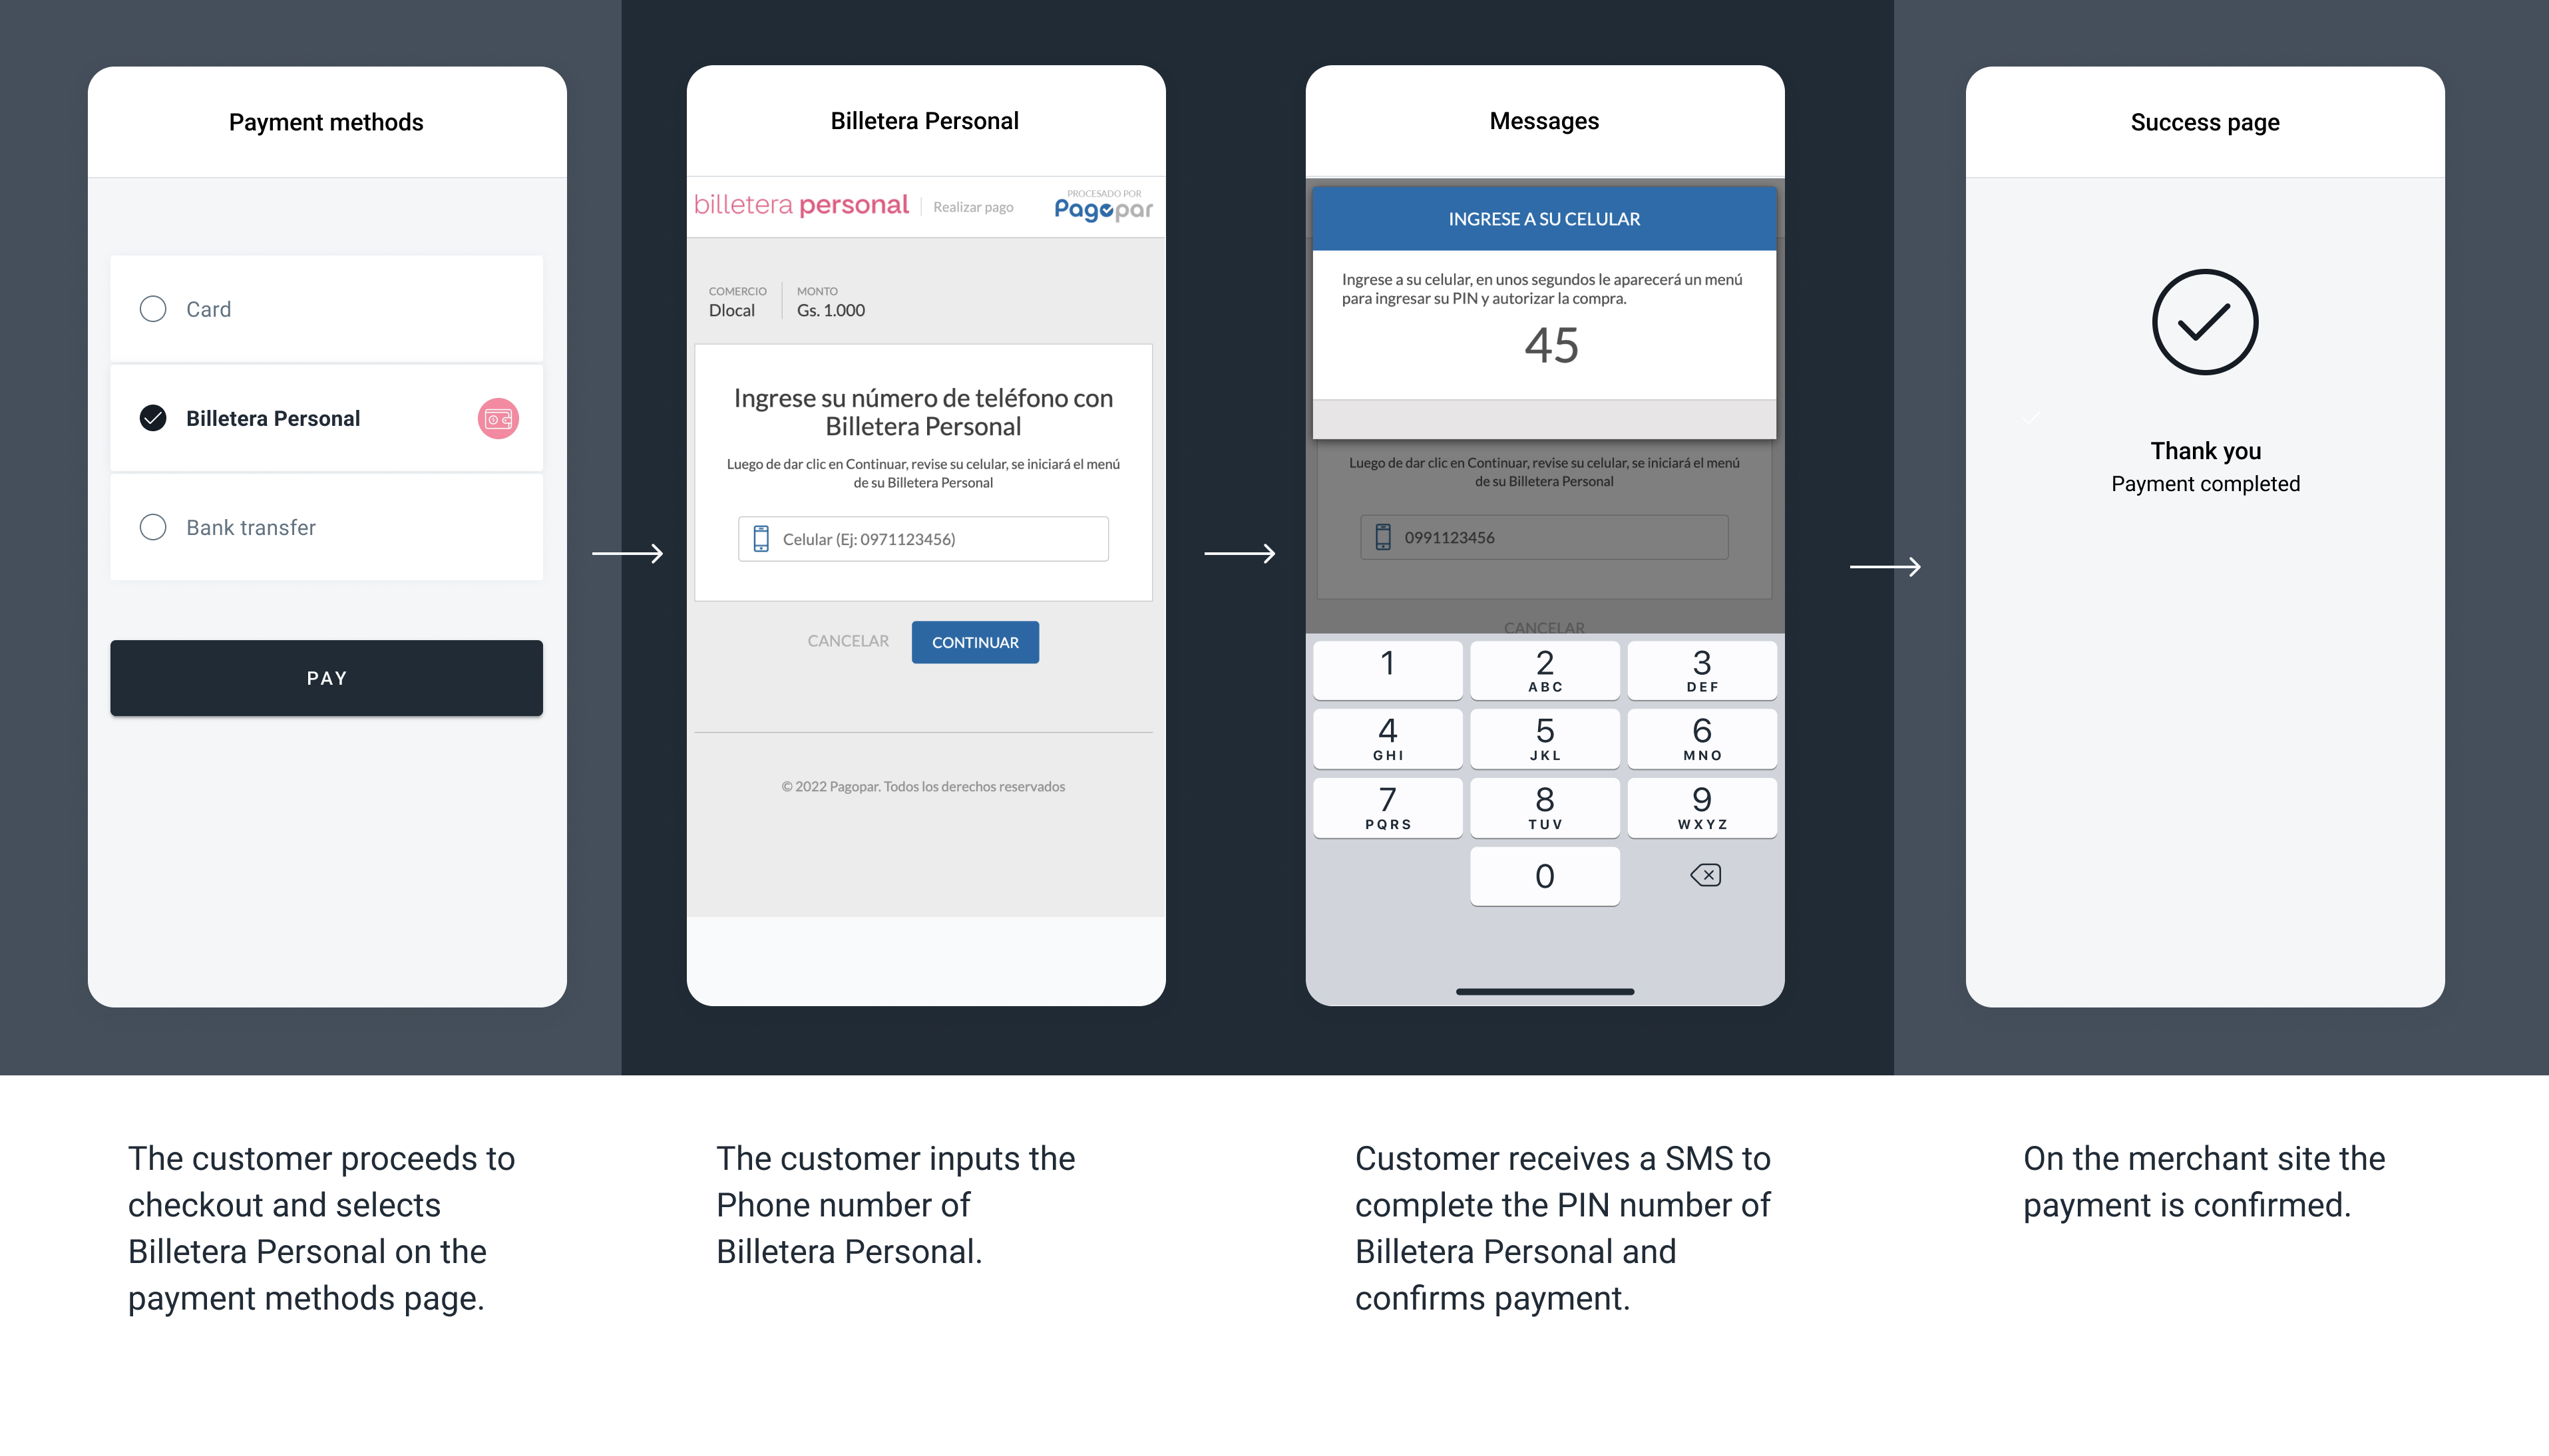 The screenshots illustrate a generic Billetera Personal payment flow.